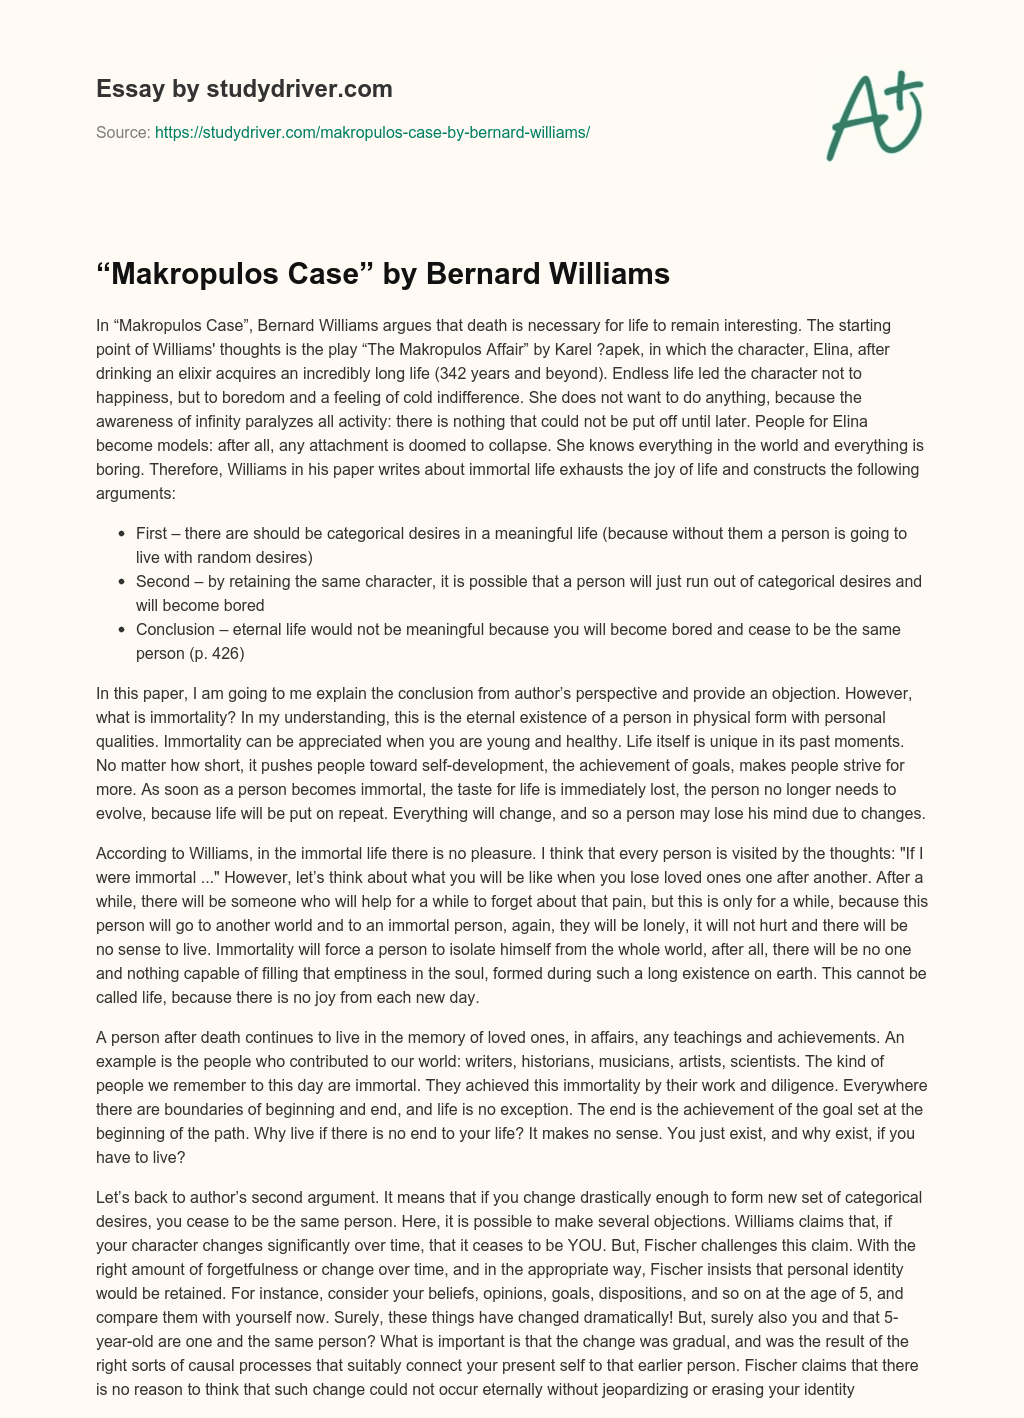 “Makropulos Case” by Bernard Williams essay